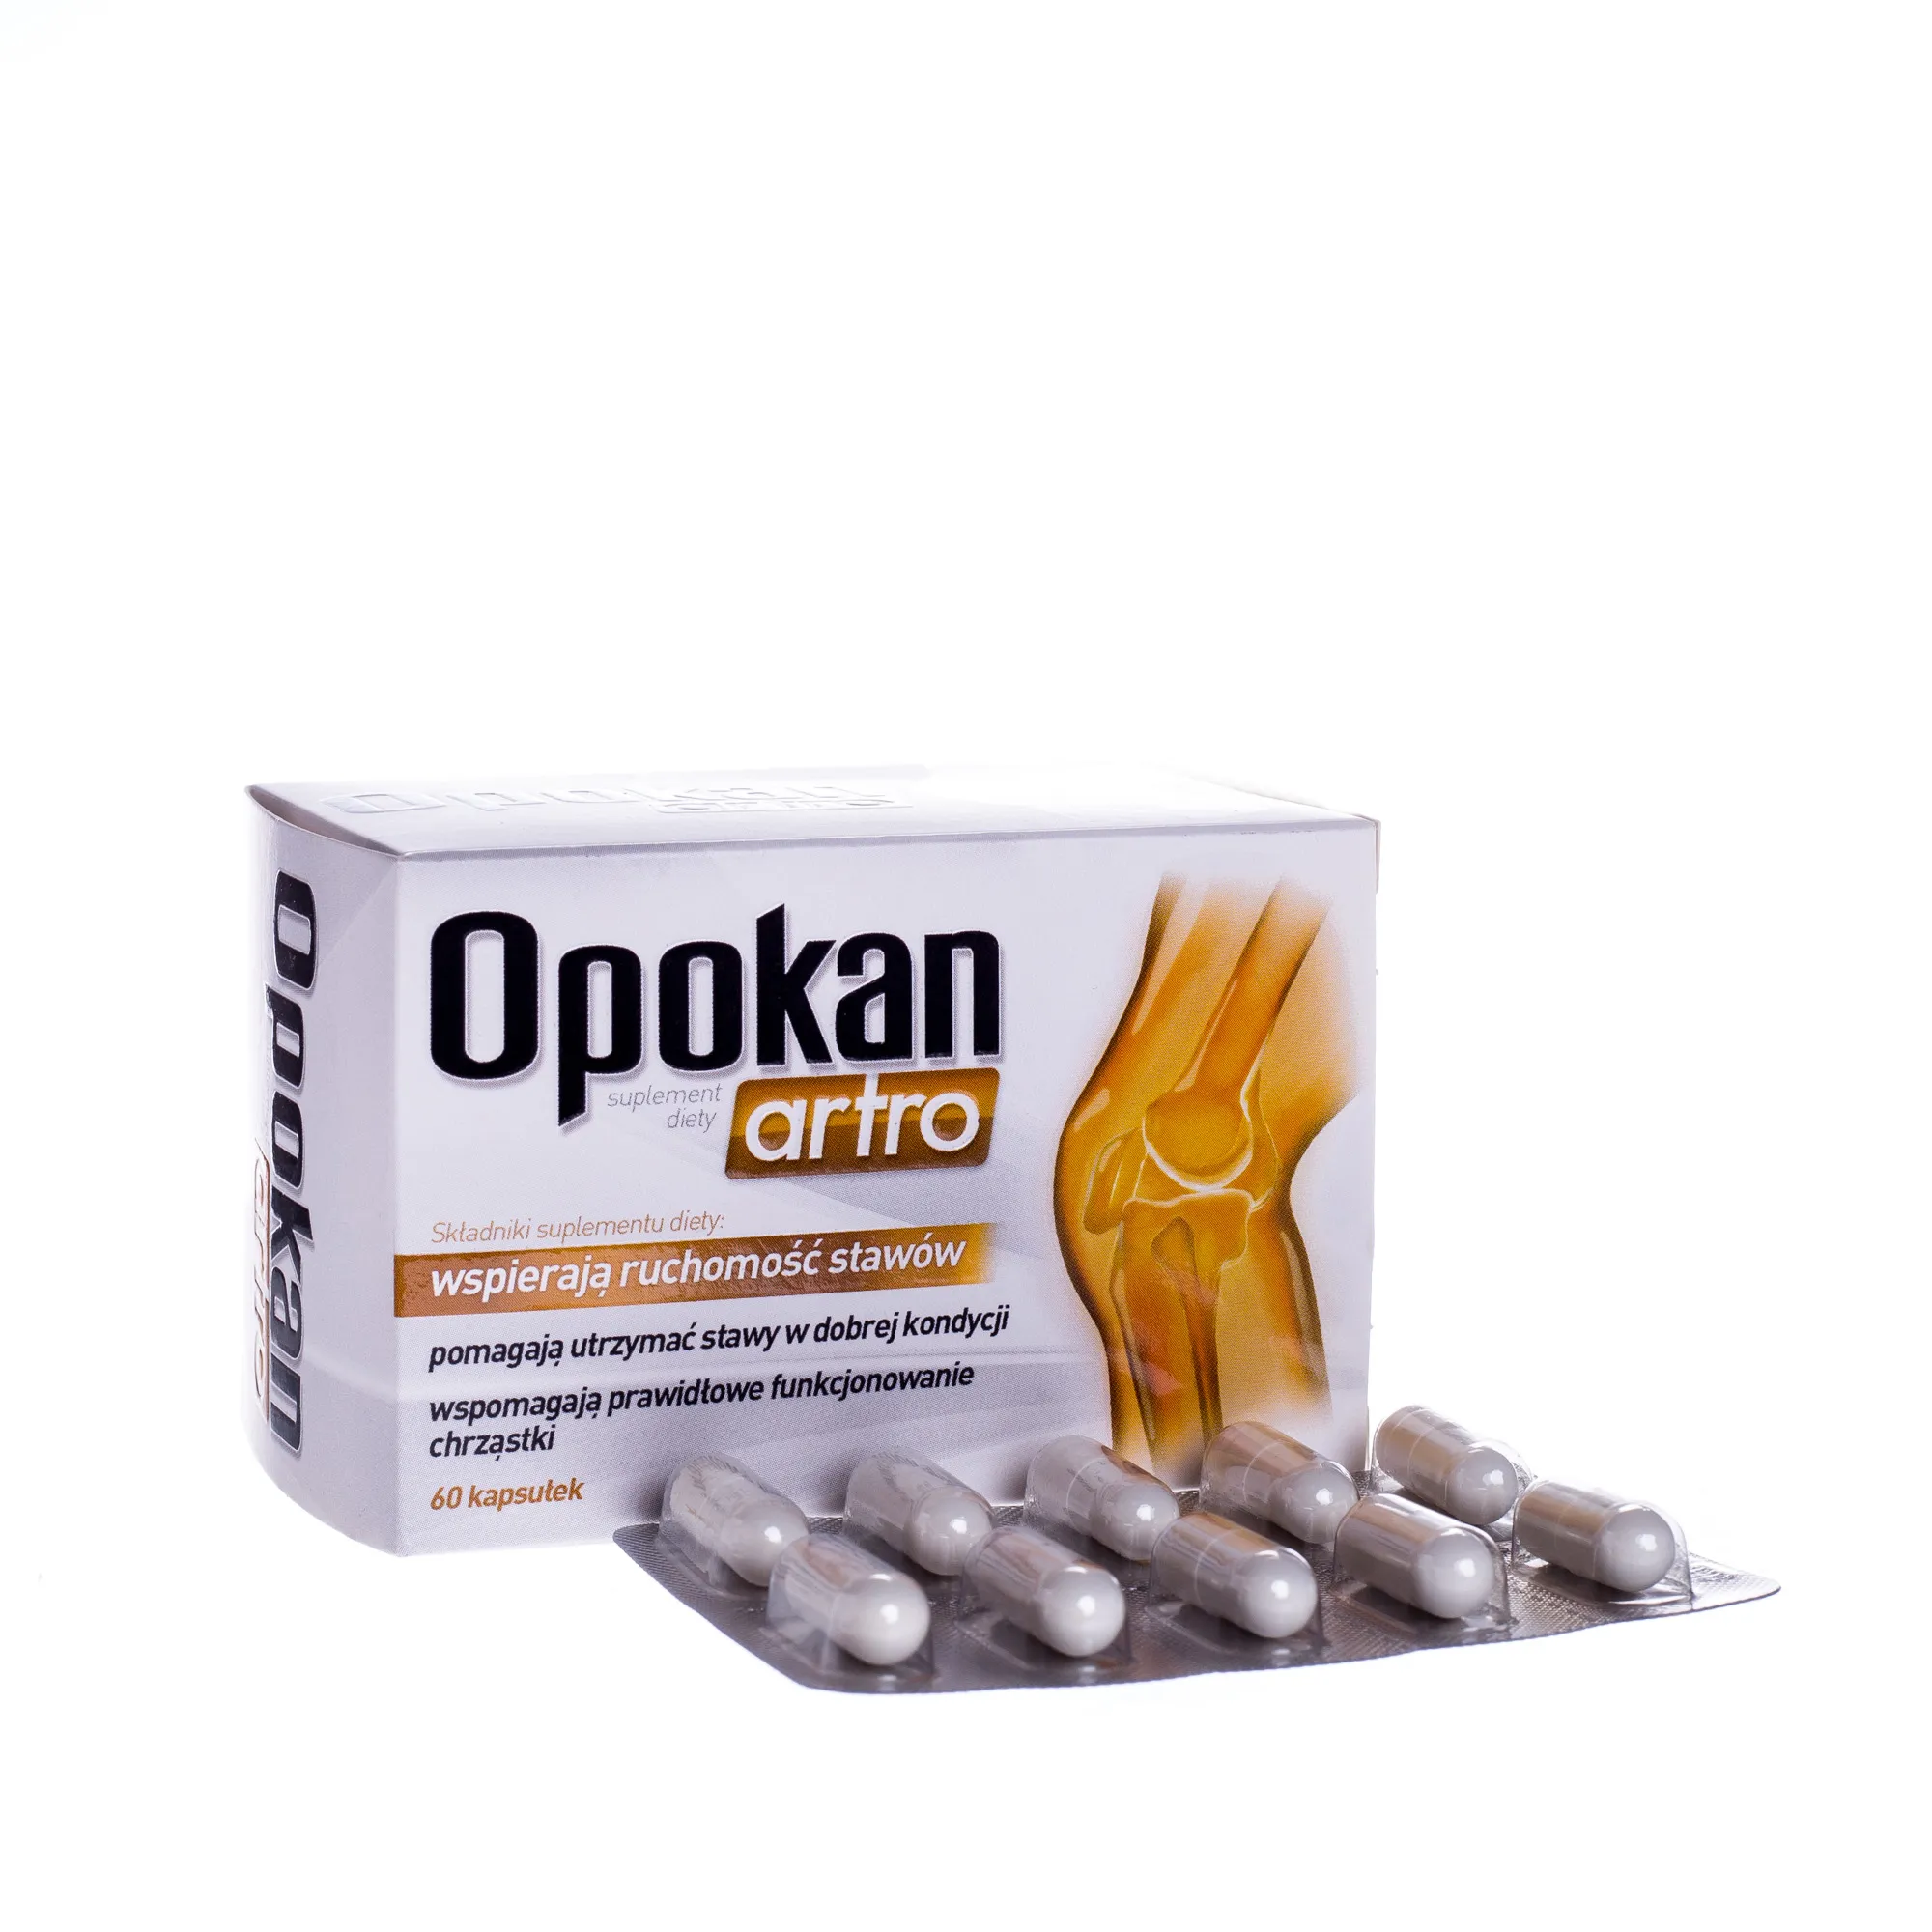 Opokan Artro, suplement diety, 60 kapsułek 